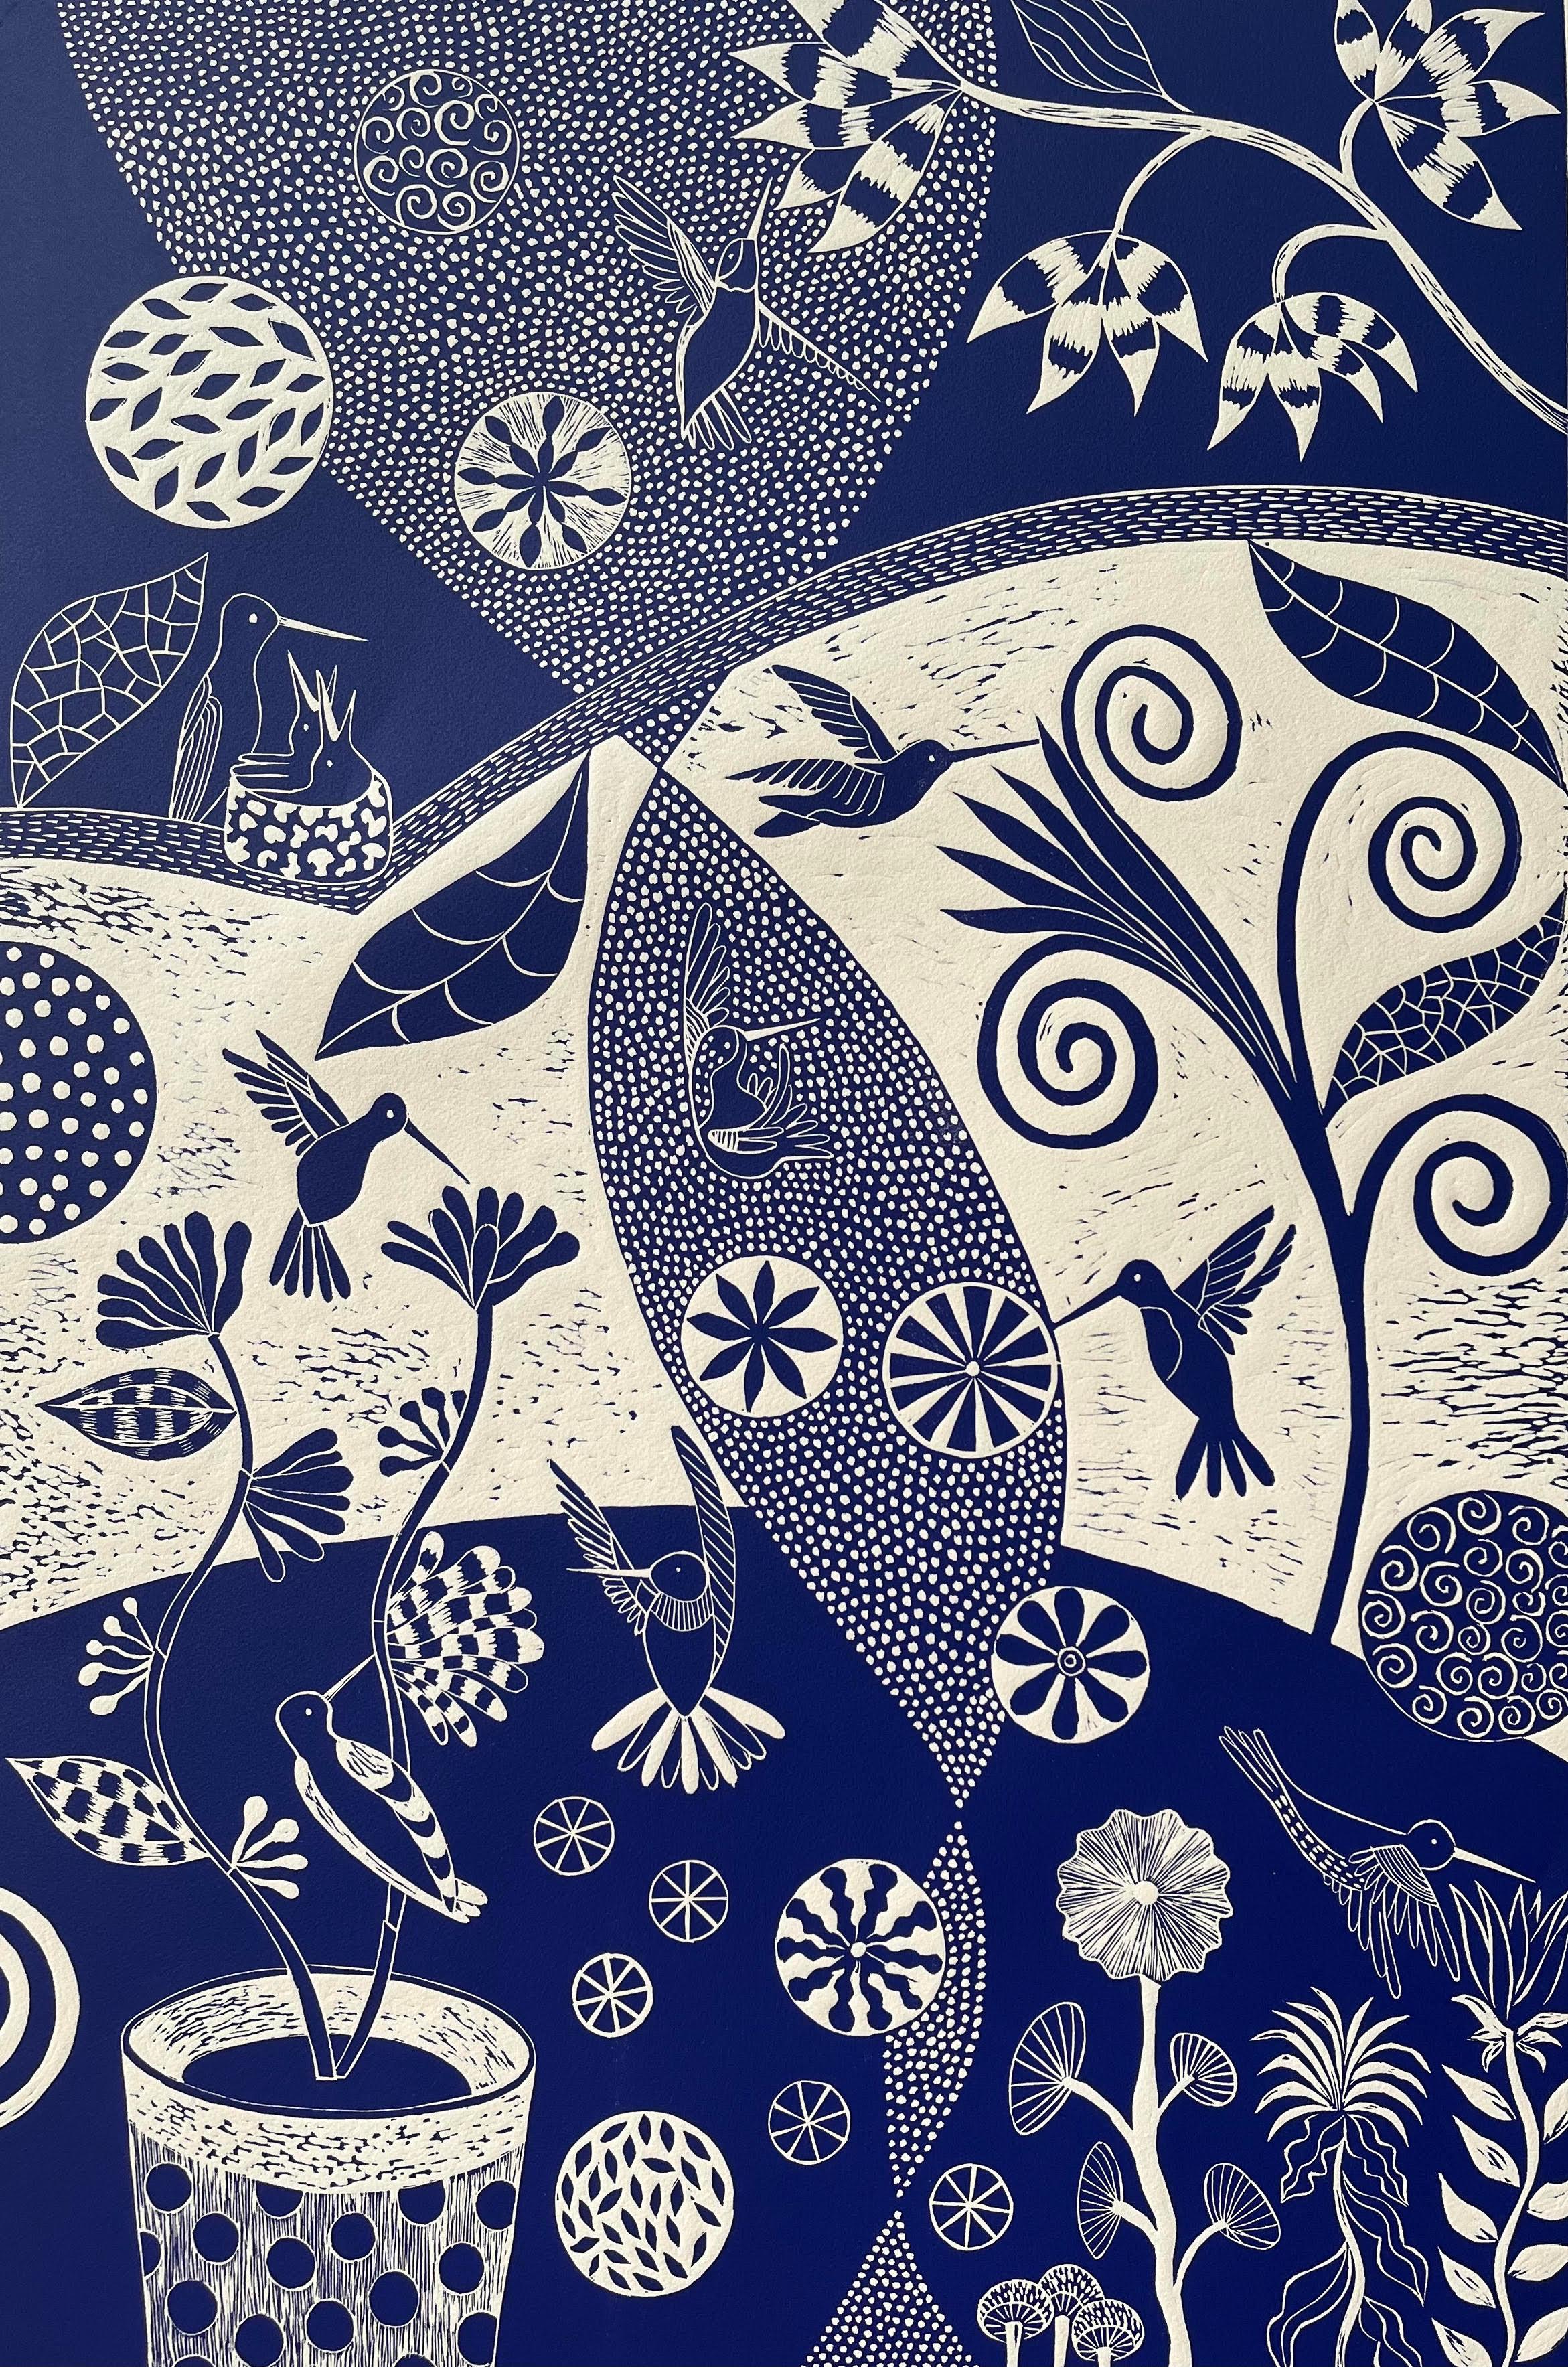 Animal Print Lisa Houck - "Humming and Harmonizing" (fredonner et harmoniser)  Impression oiseaux volants d'inspiration artisanale, bleu/blanc cassé